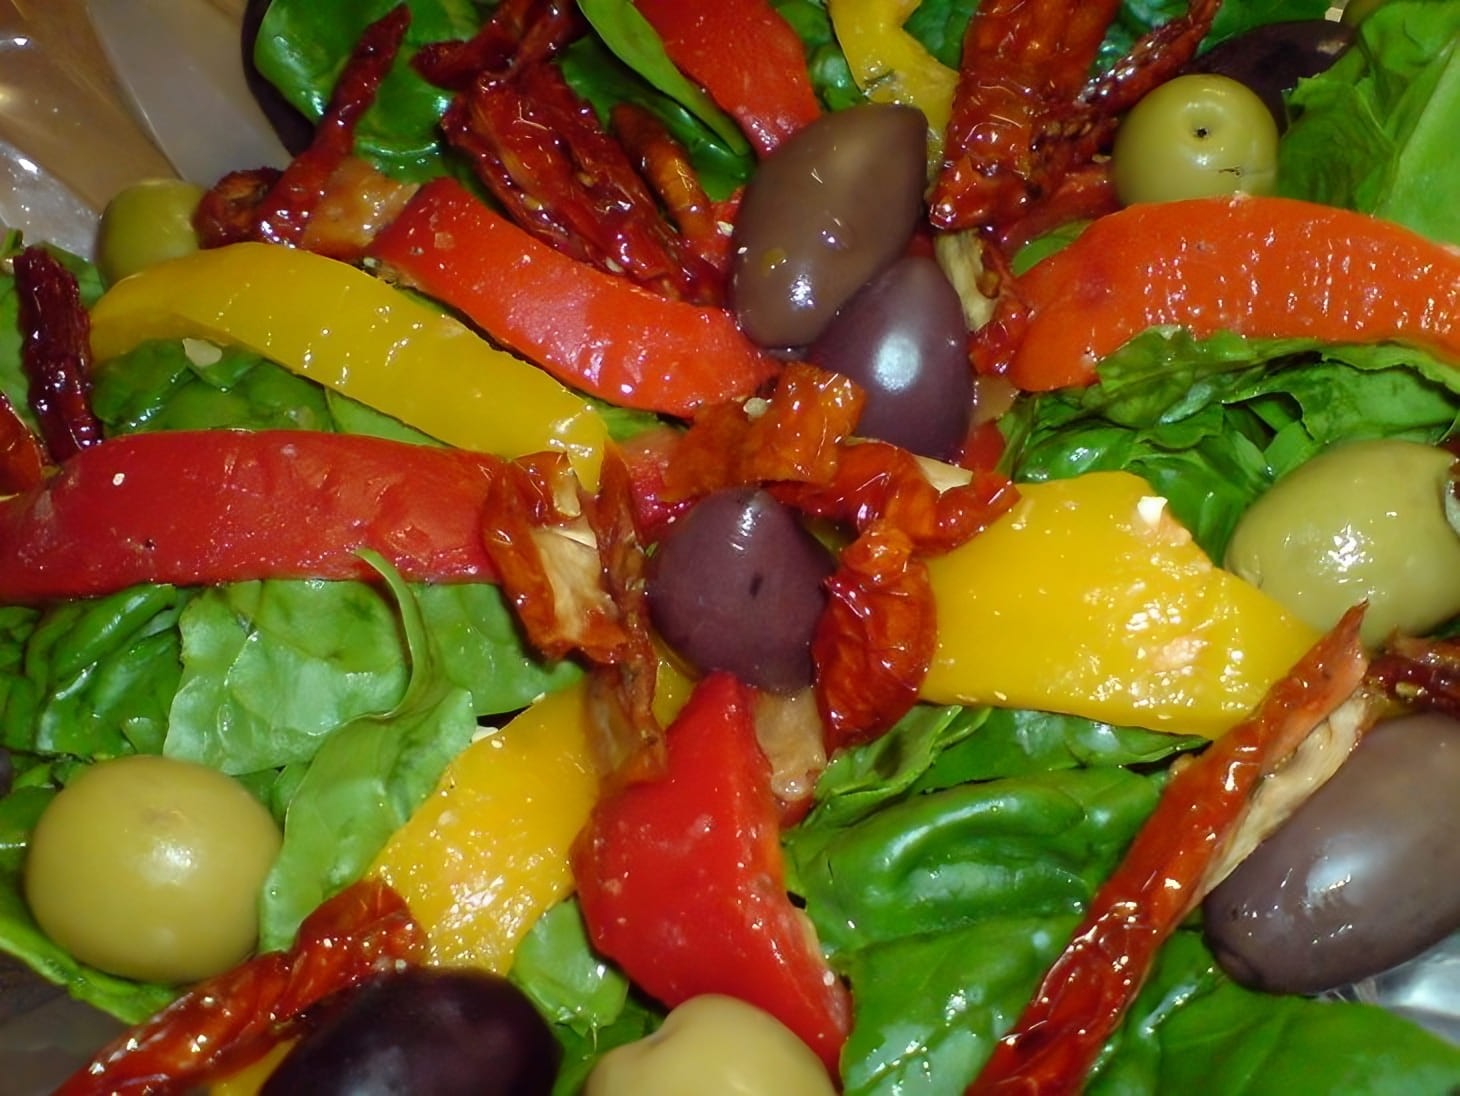 Antipasti salad as a complete dinner